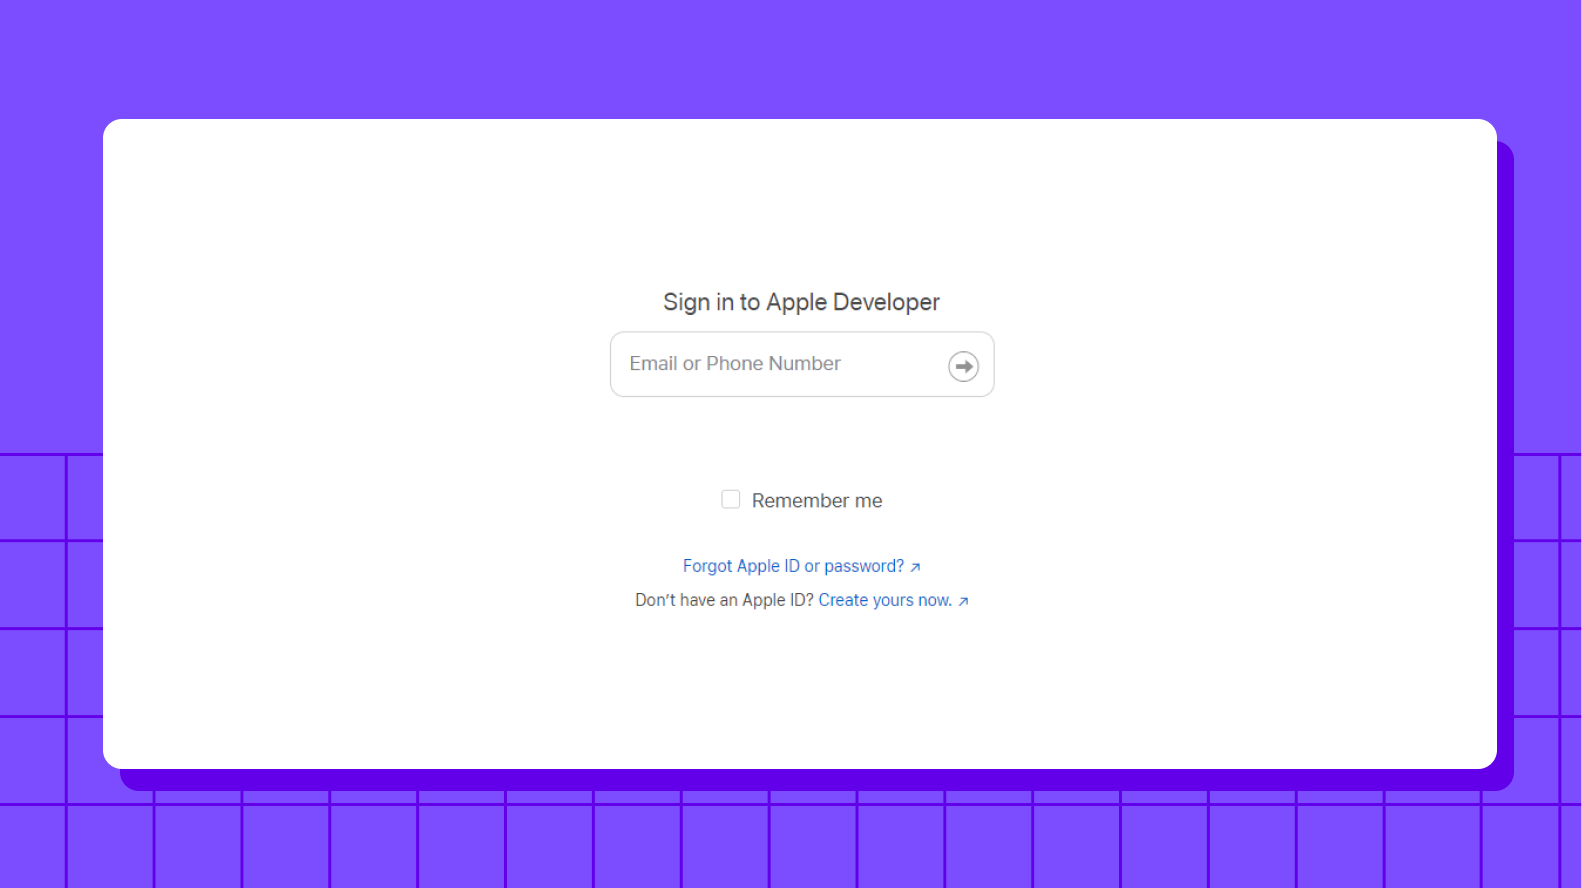 Apple developer account sign in screen on Apple’s website 